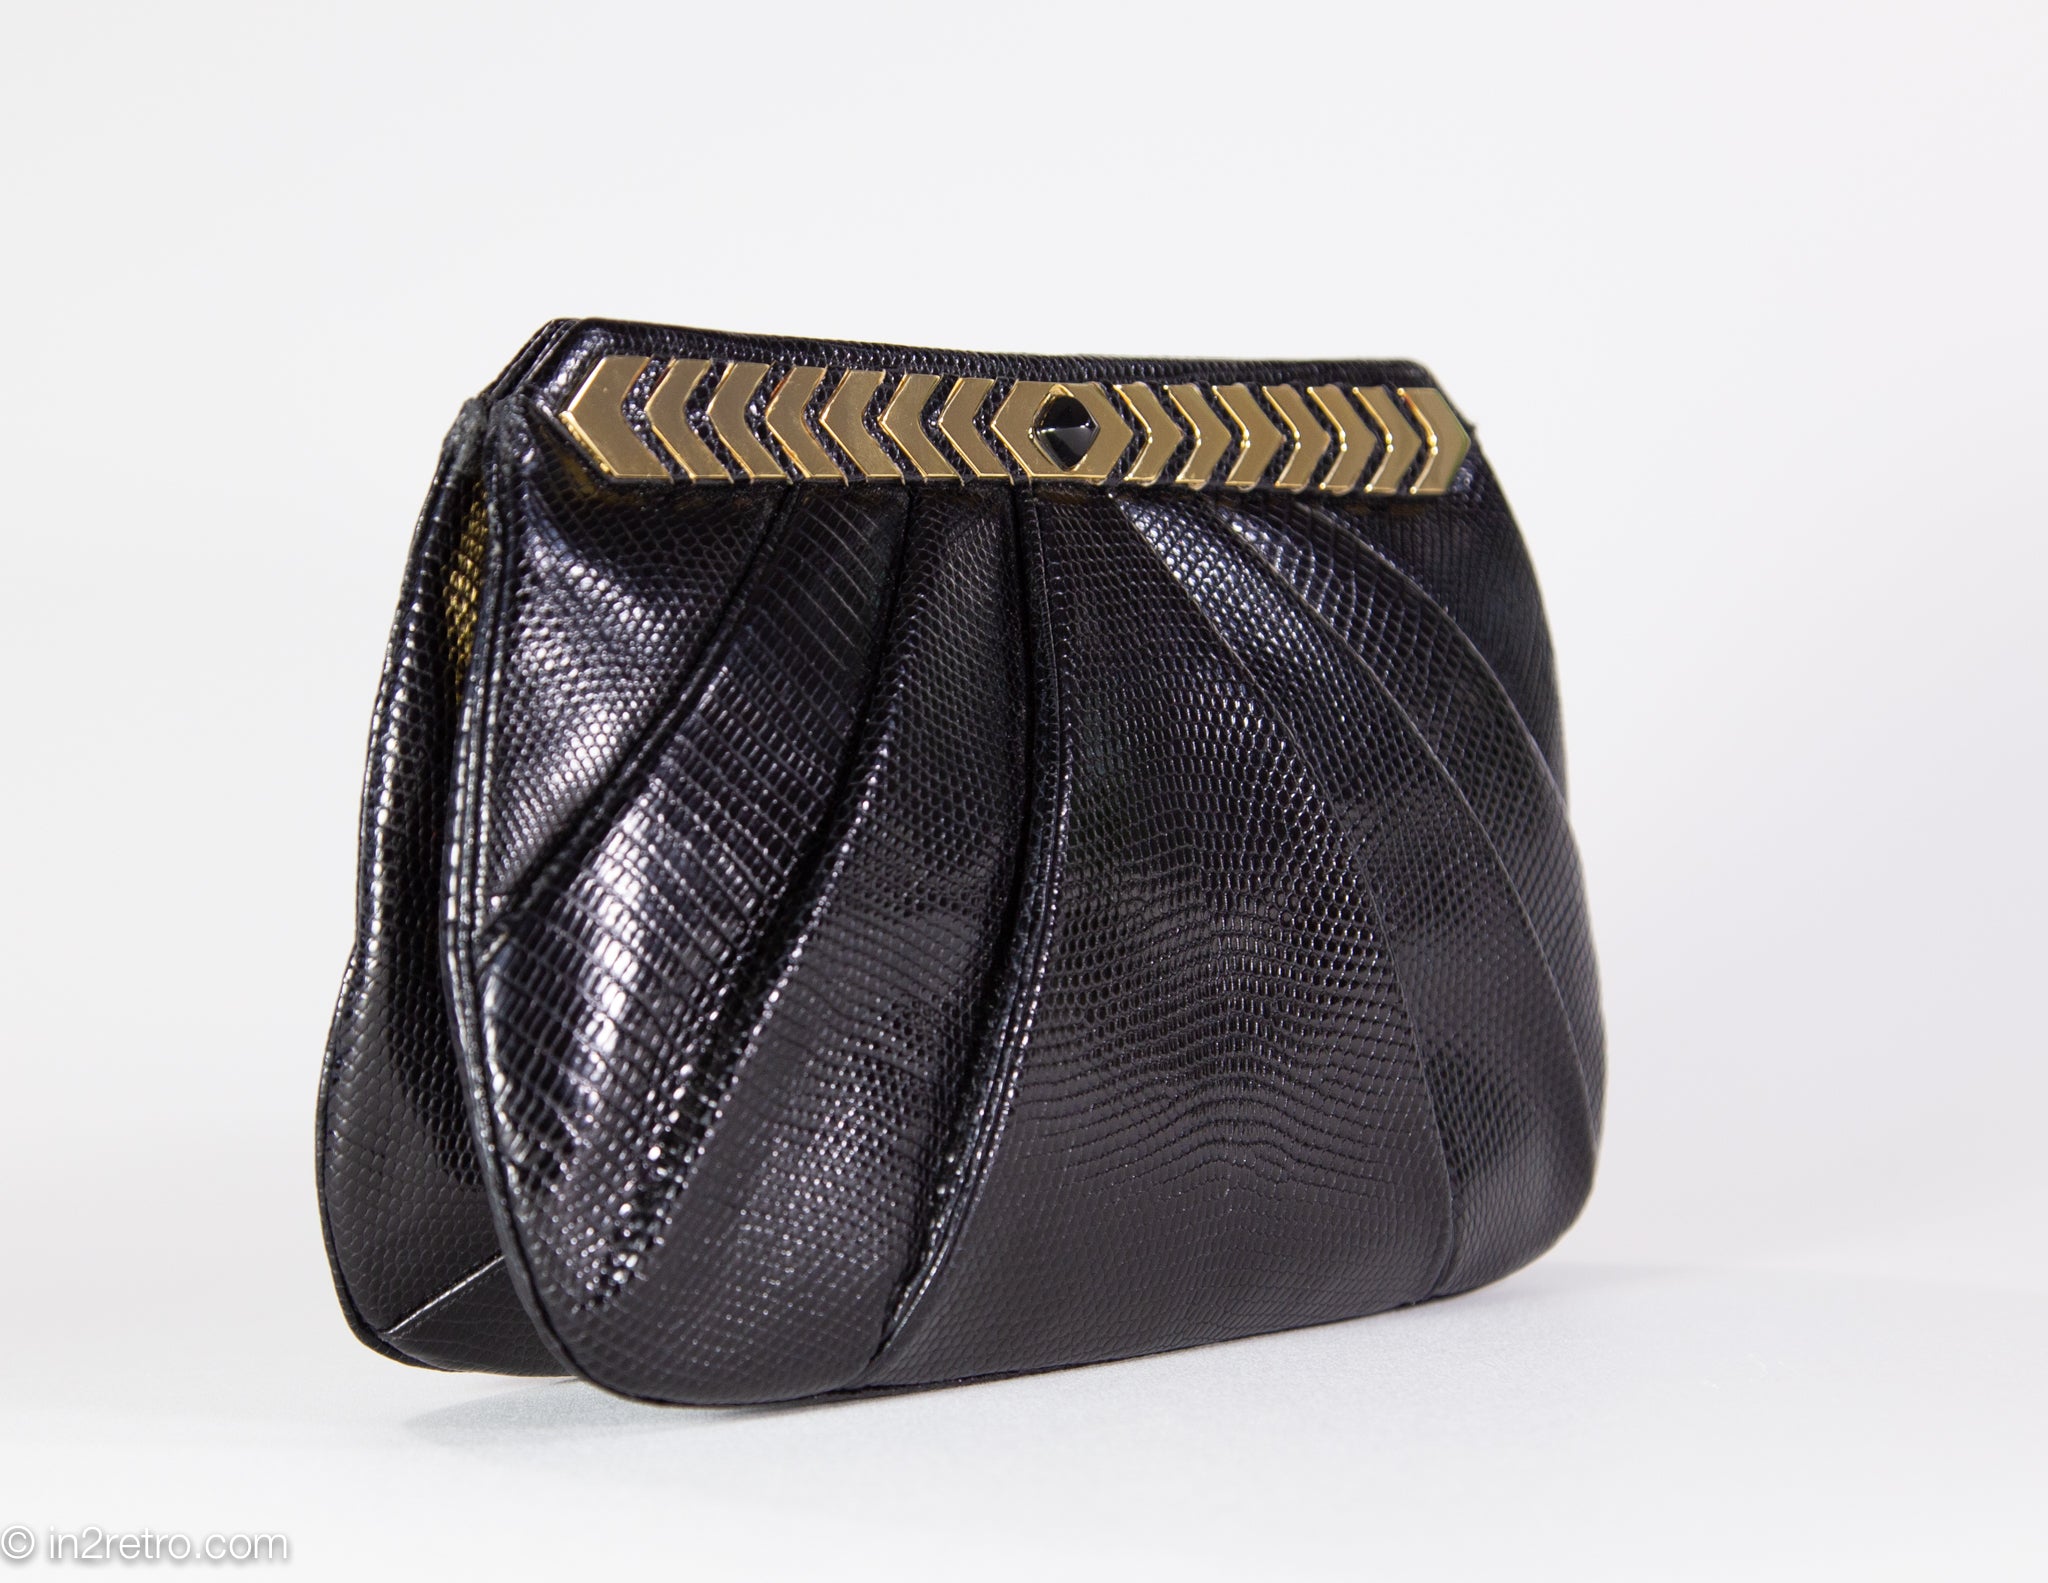 Vintage Judith Leiber purse